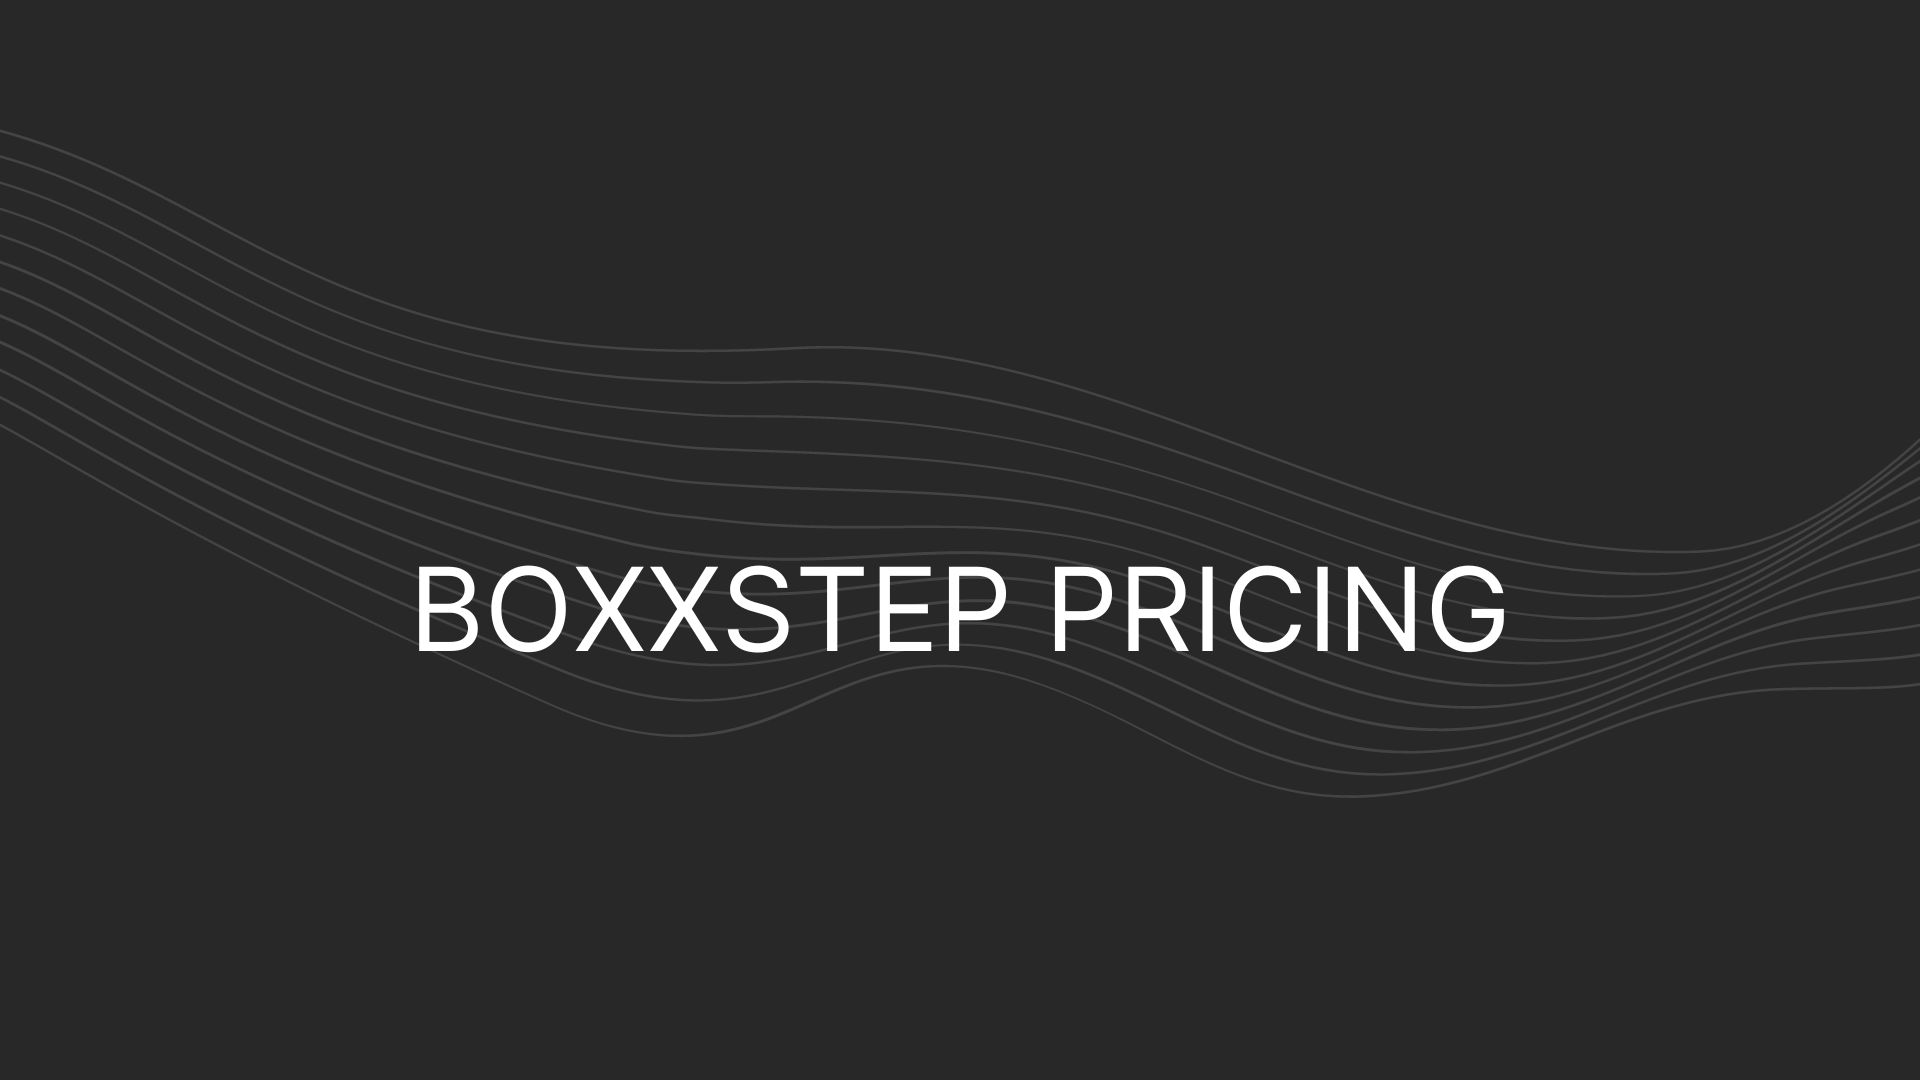 Boxxstep Pricing